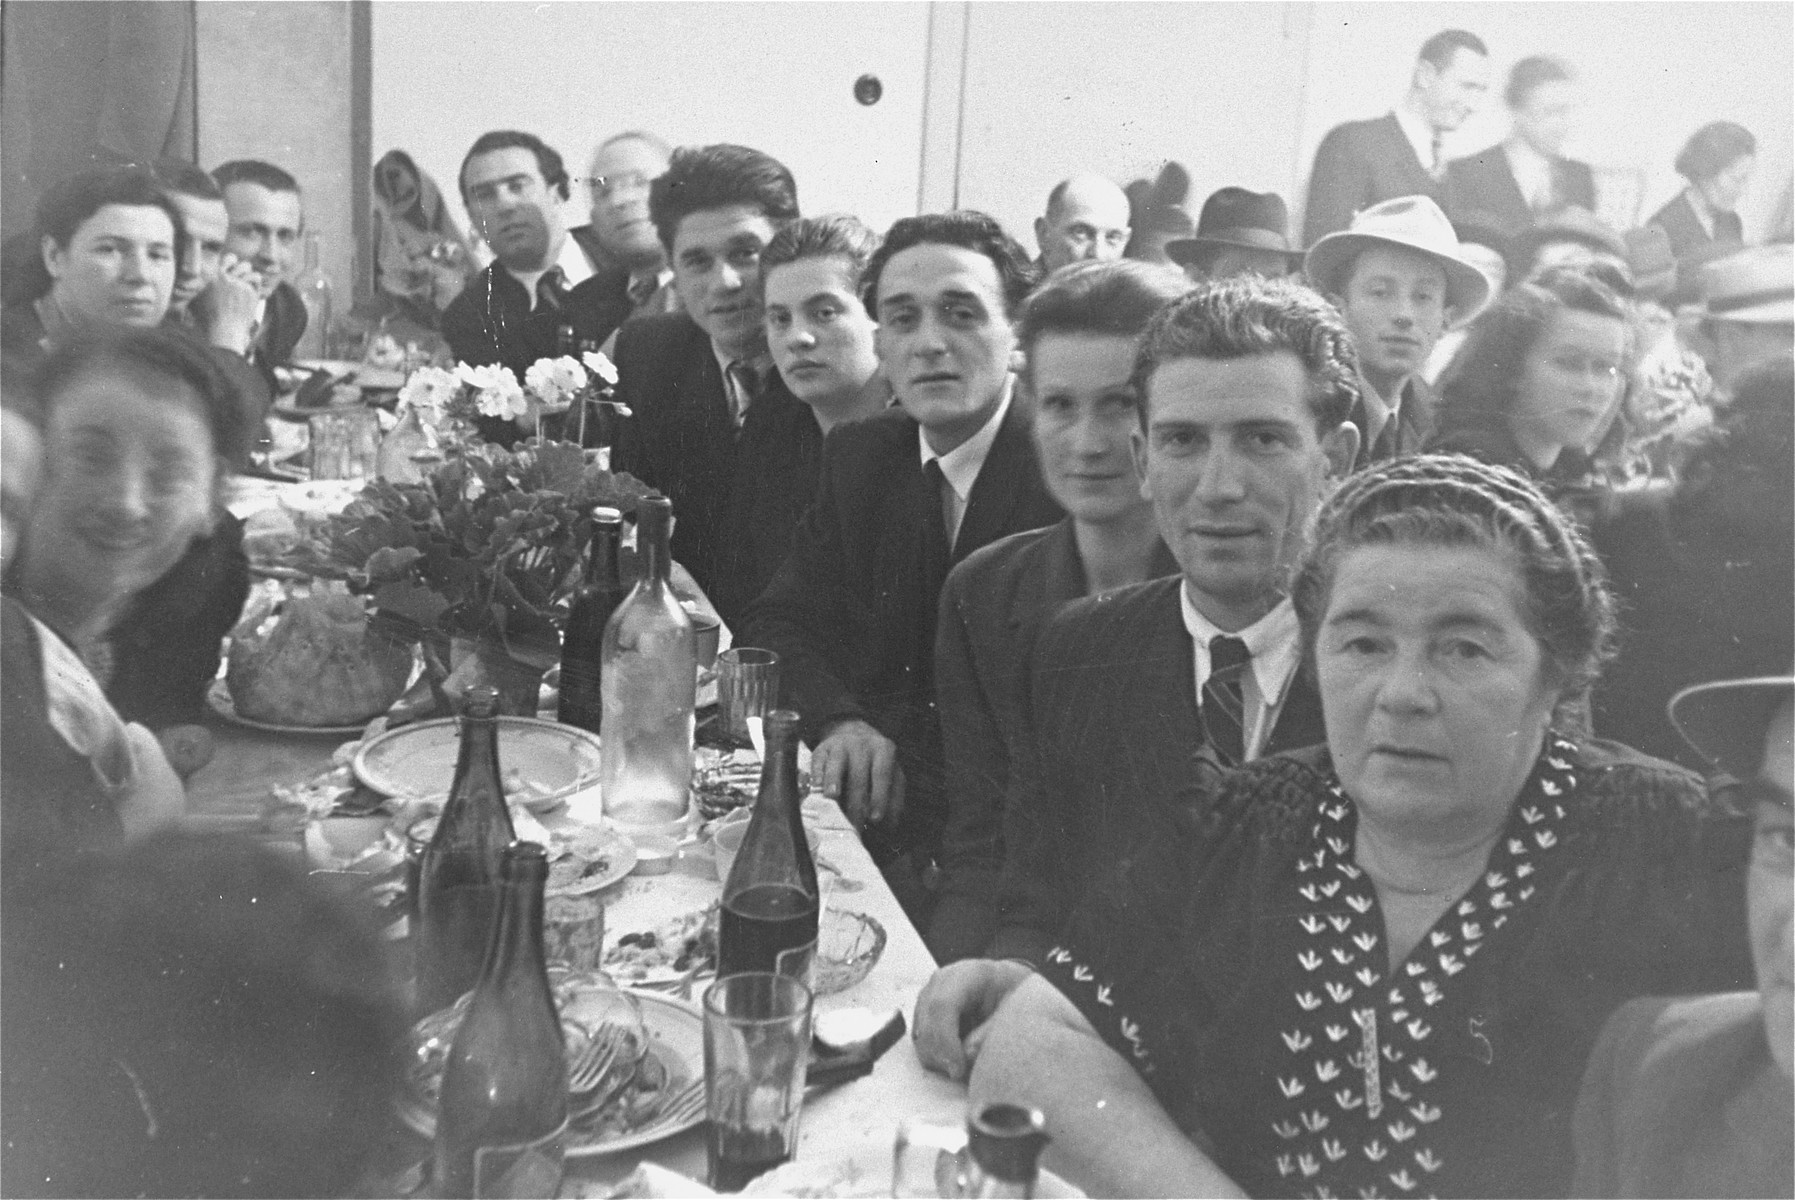 A Jewish wedding celebration in the Ebelsberg DP camp in Linz, Austria.